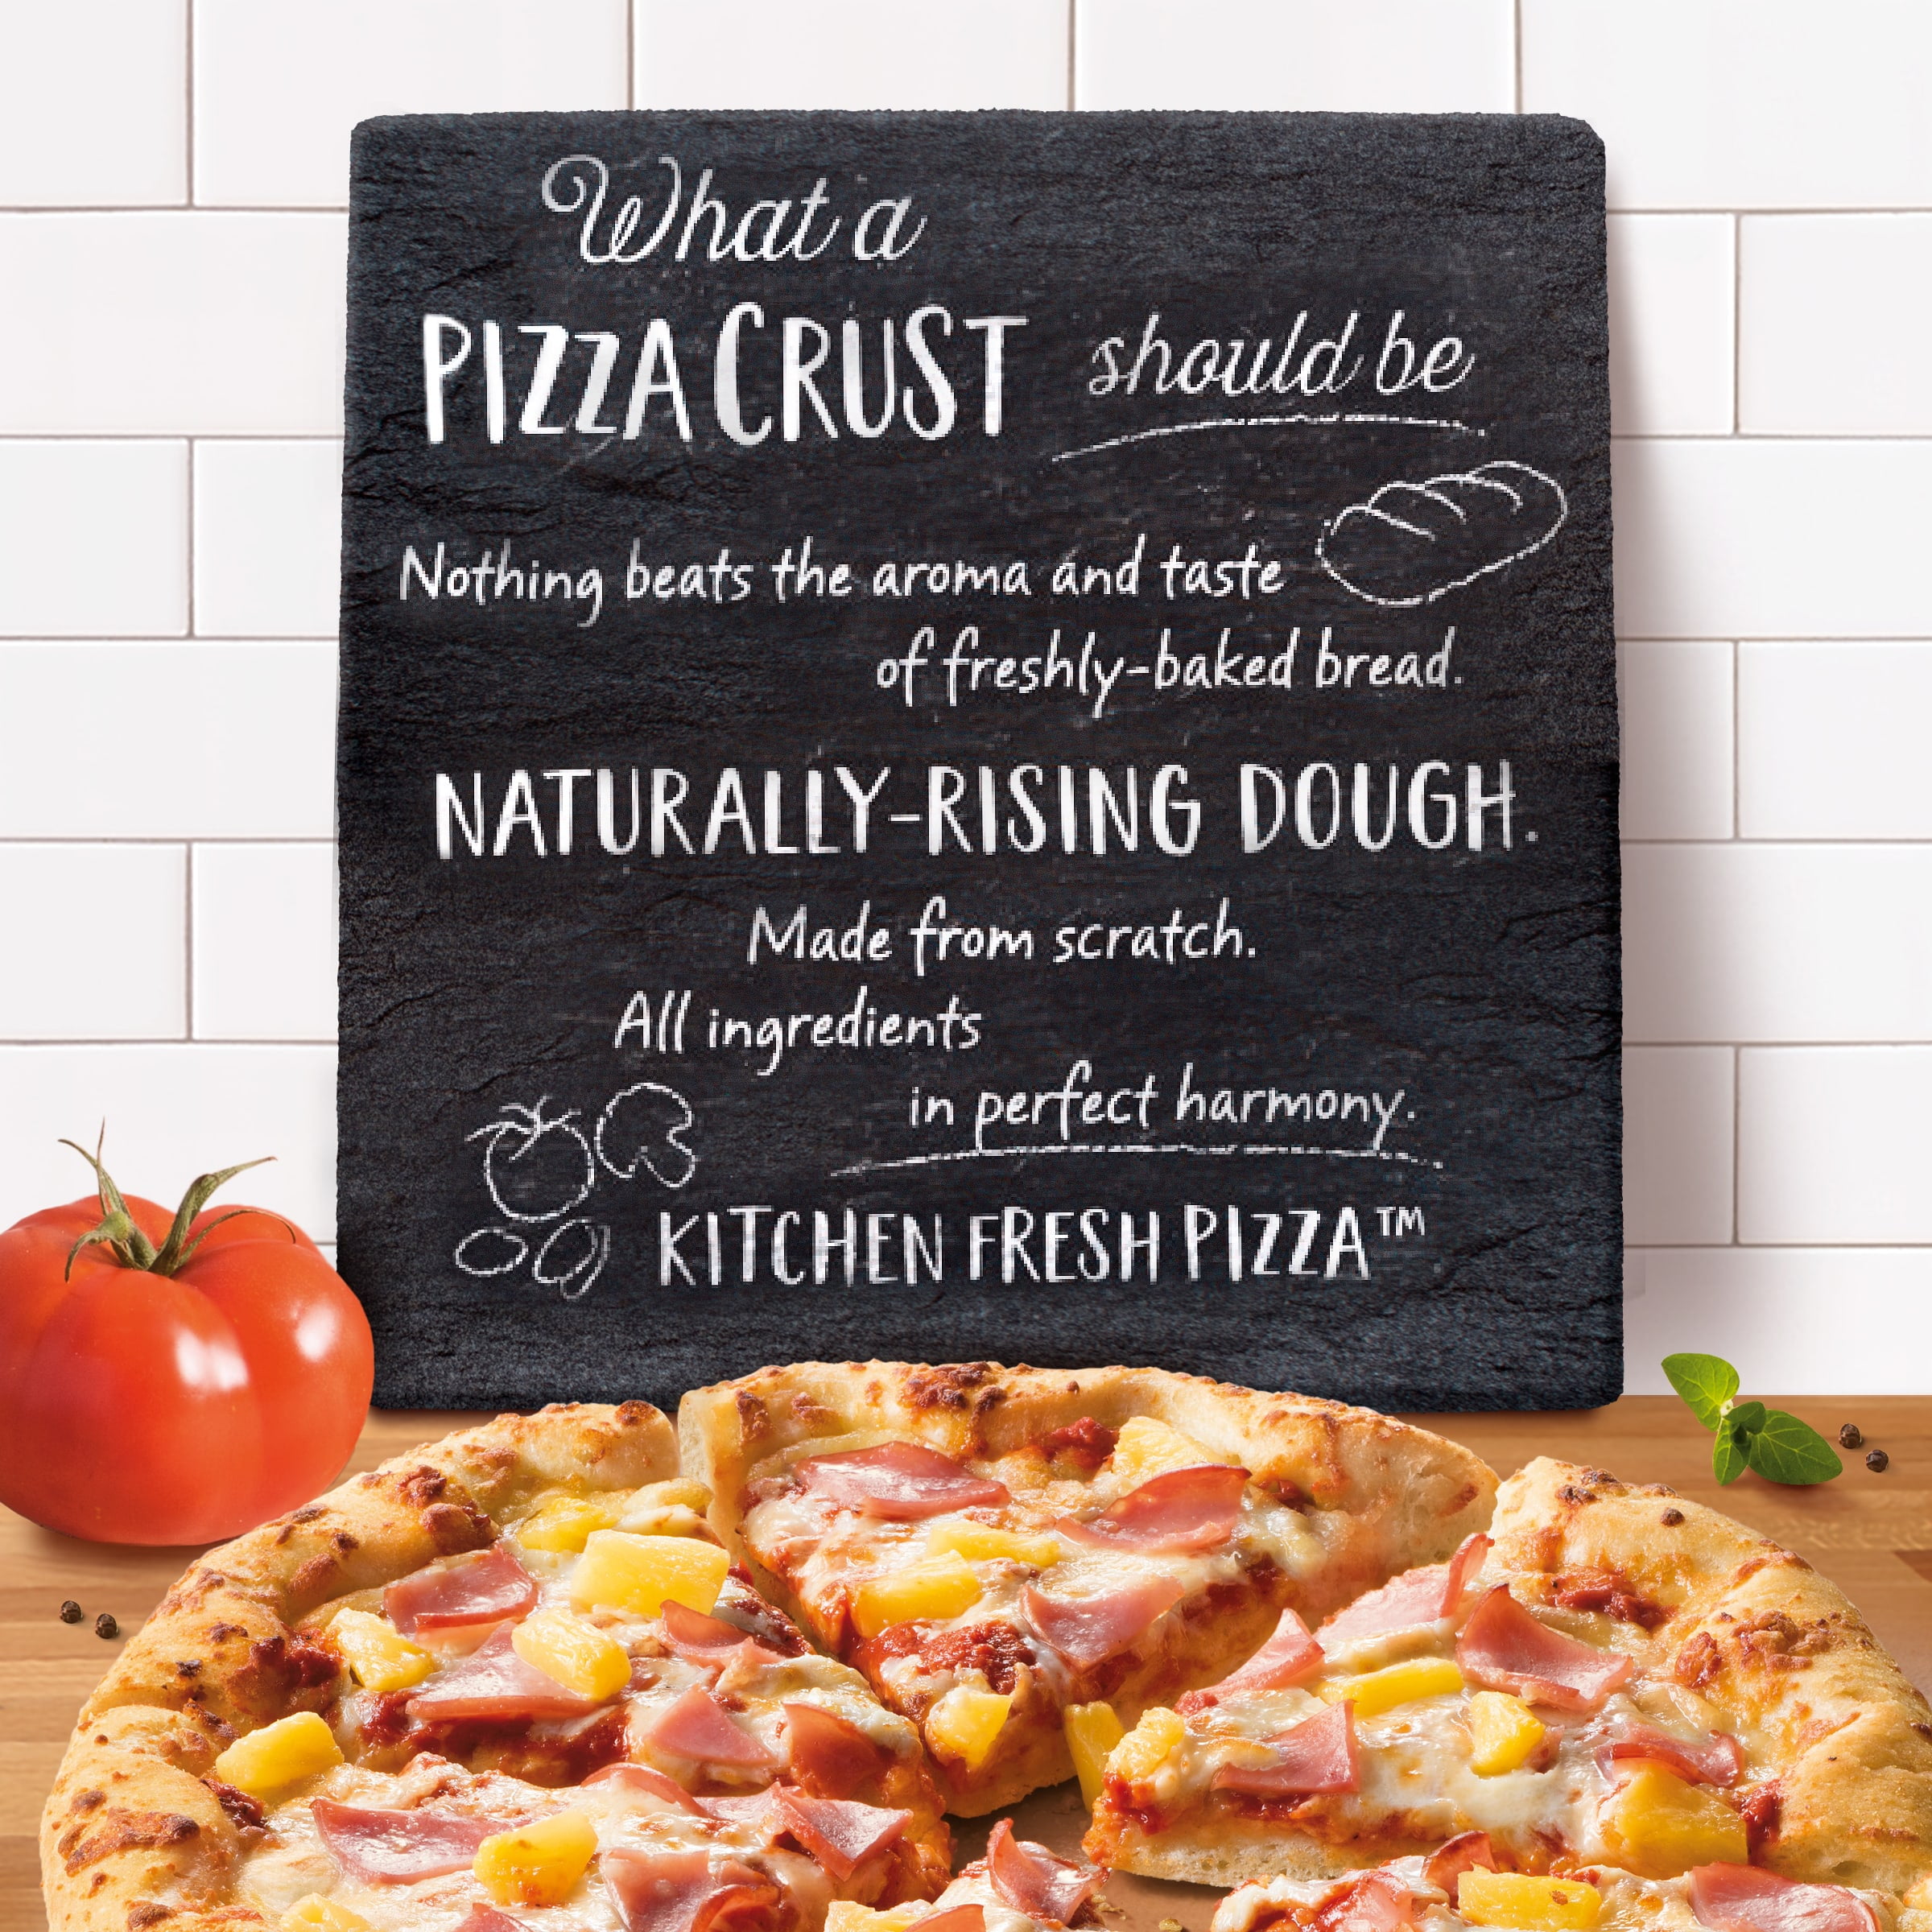 Freschetta Naturally Rising Crust Pizza, Canadian Style Bacon & Pineapple  (Frozen) 27.51 oz 